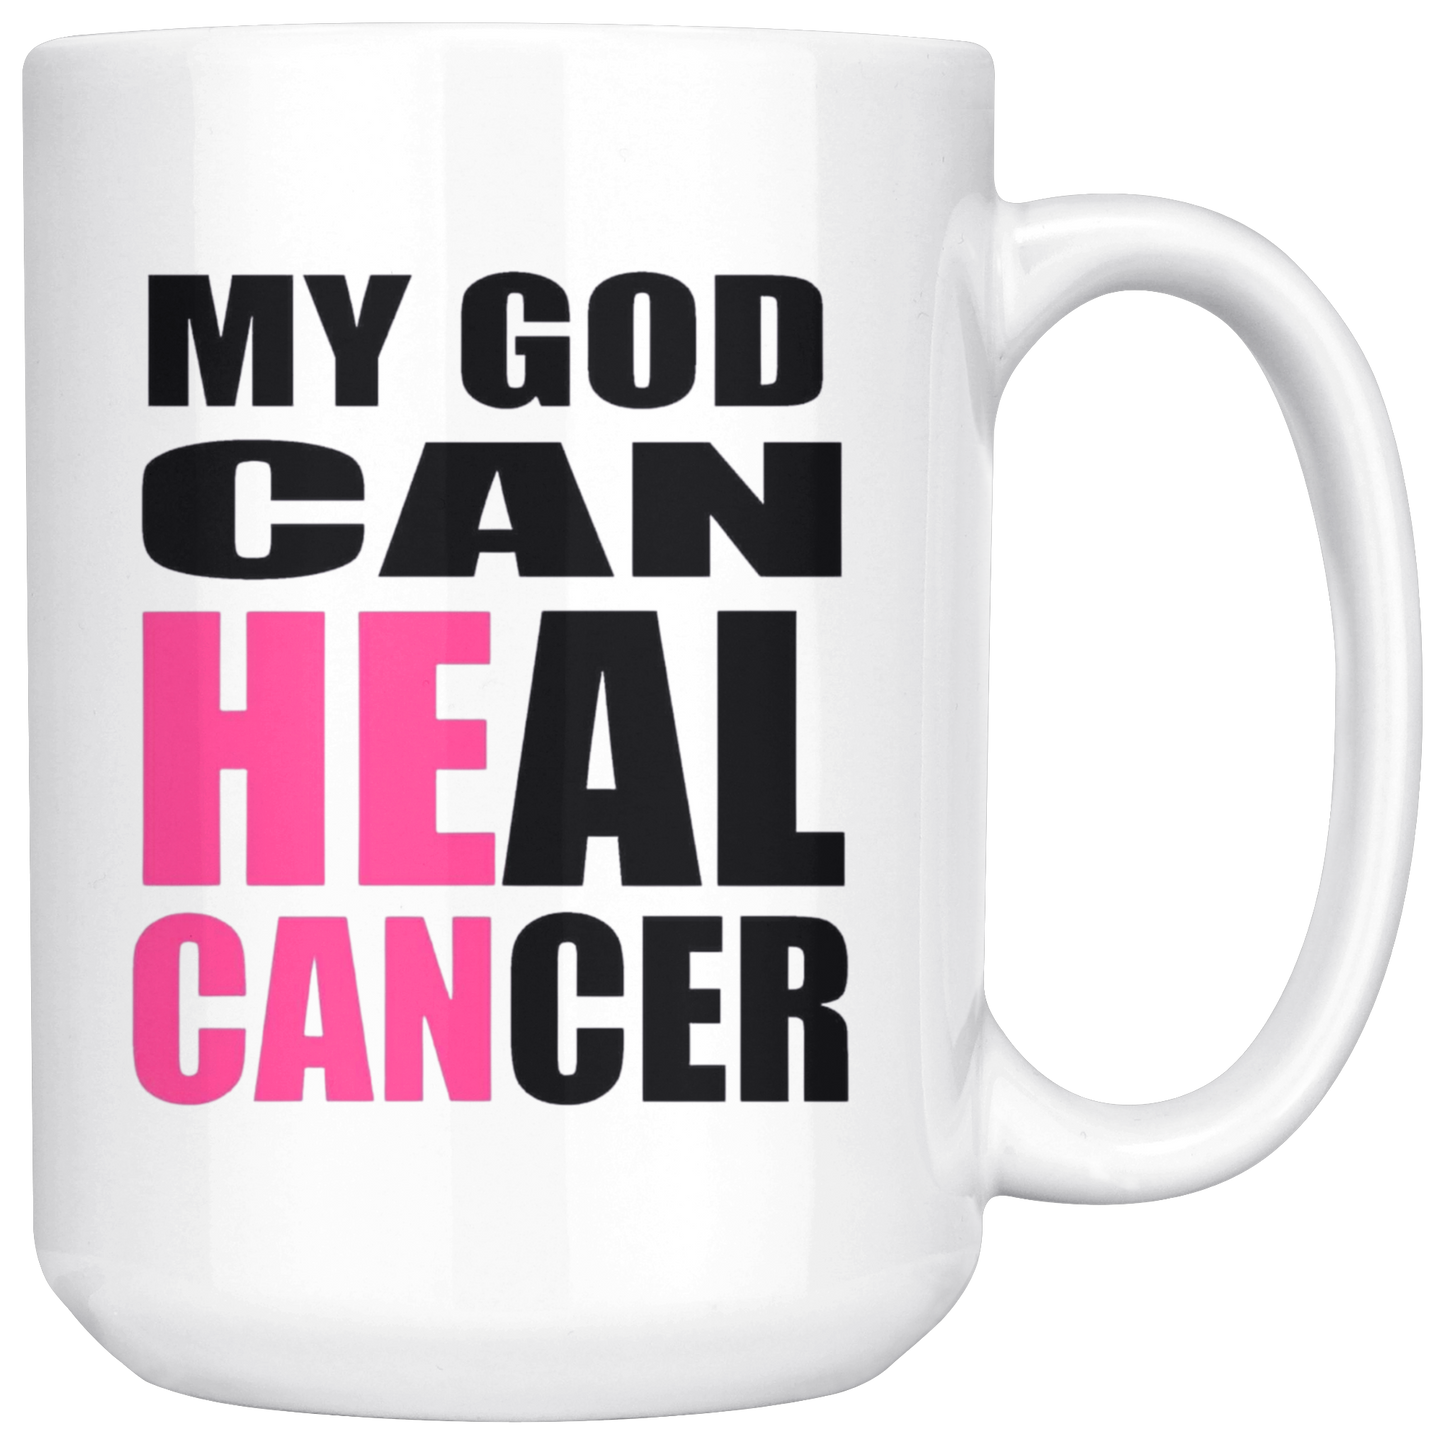 My God Can Heal Cancer Mug